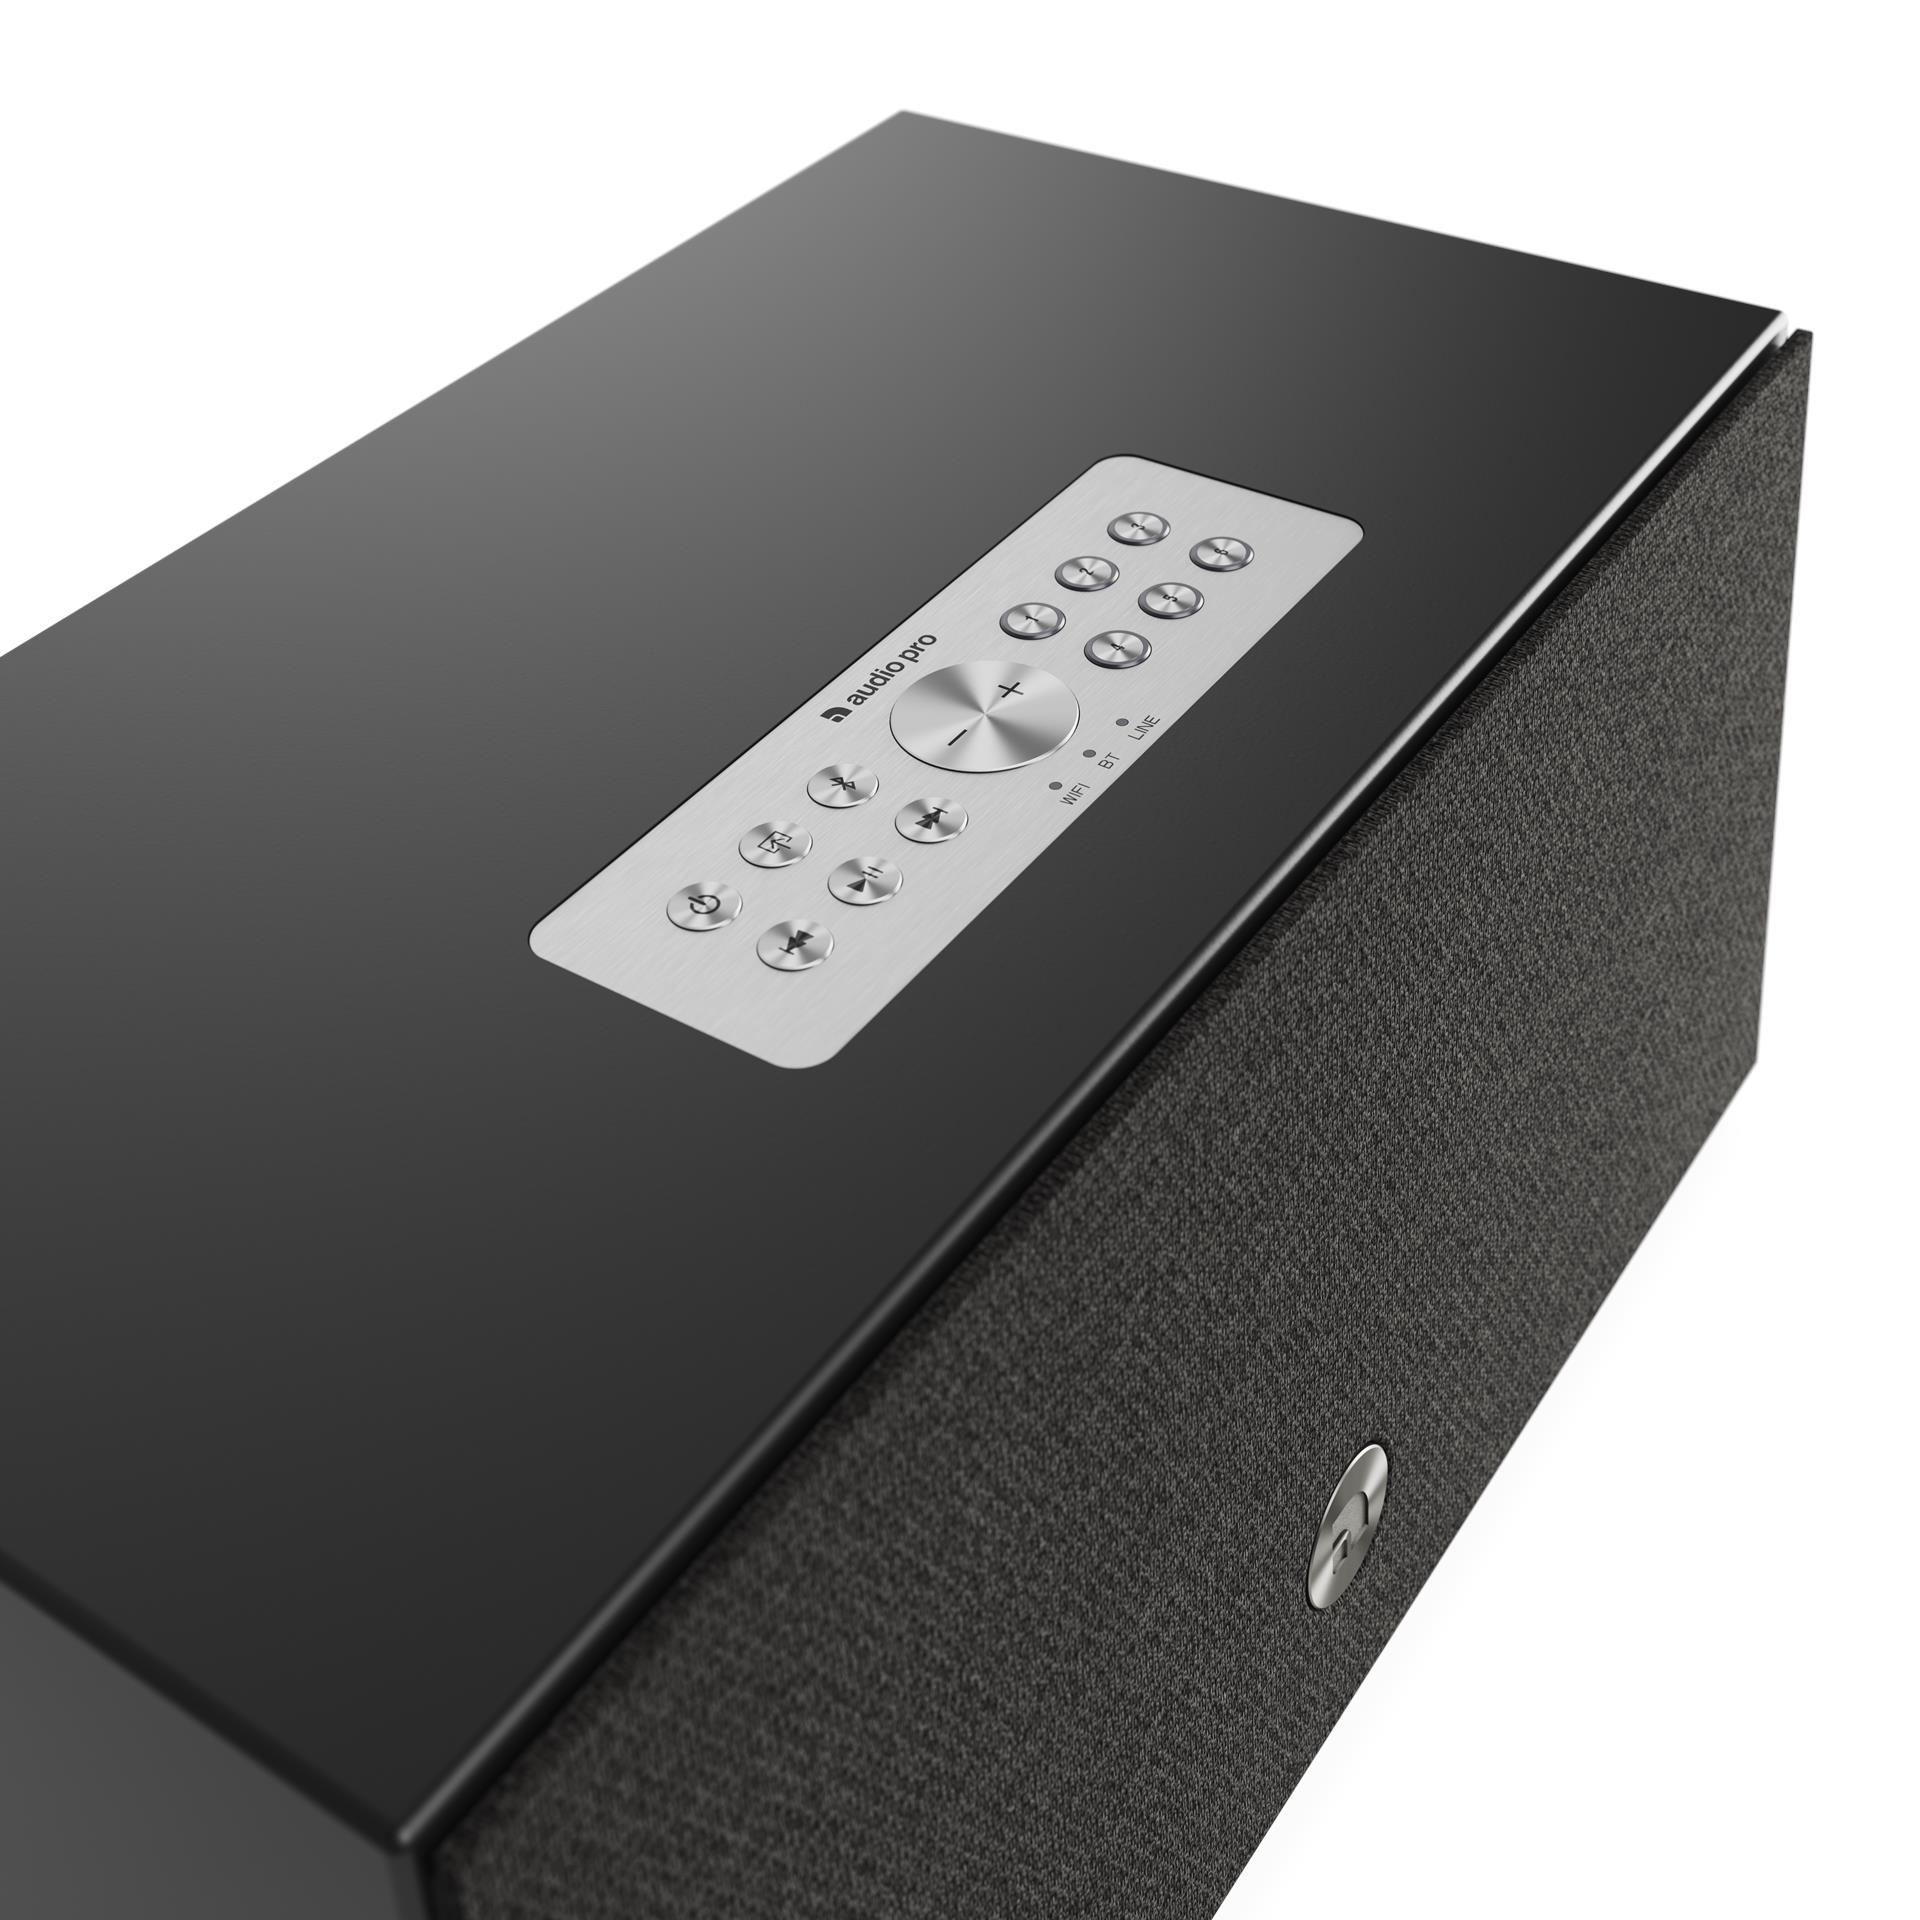 Audio Pro C10 MkII wireless Bluetooth speaker, Black